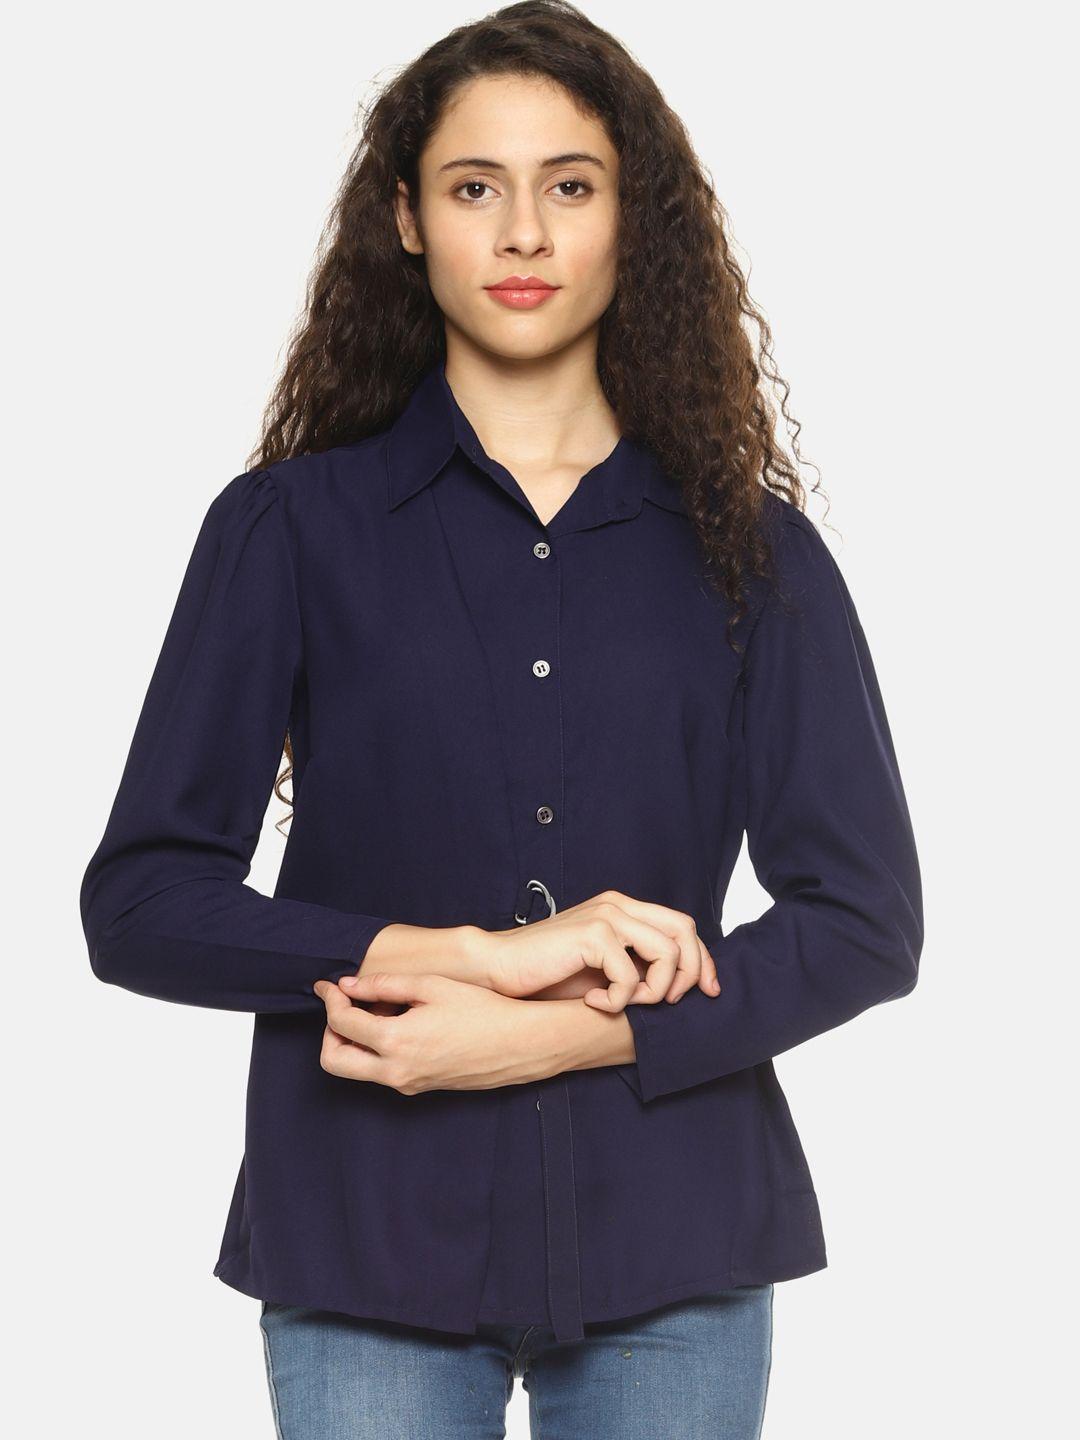 sahora women navy blue regular fit solid casual shirt